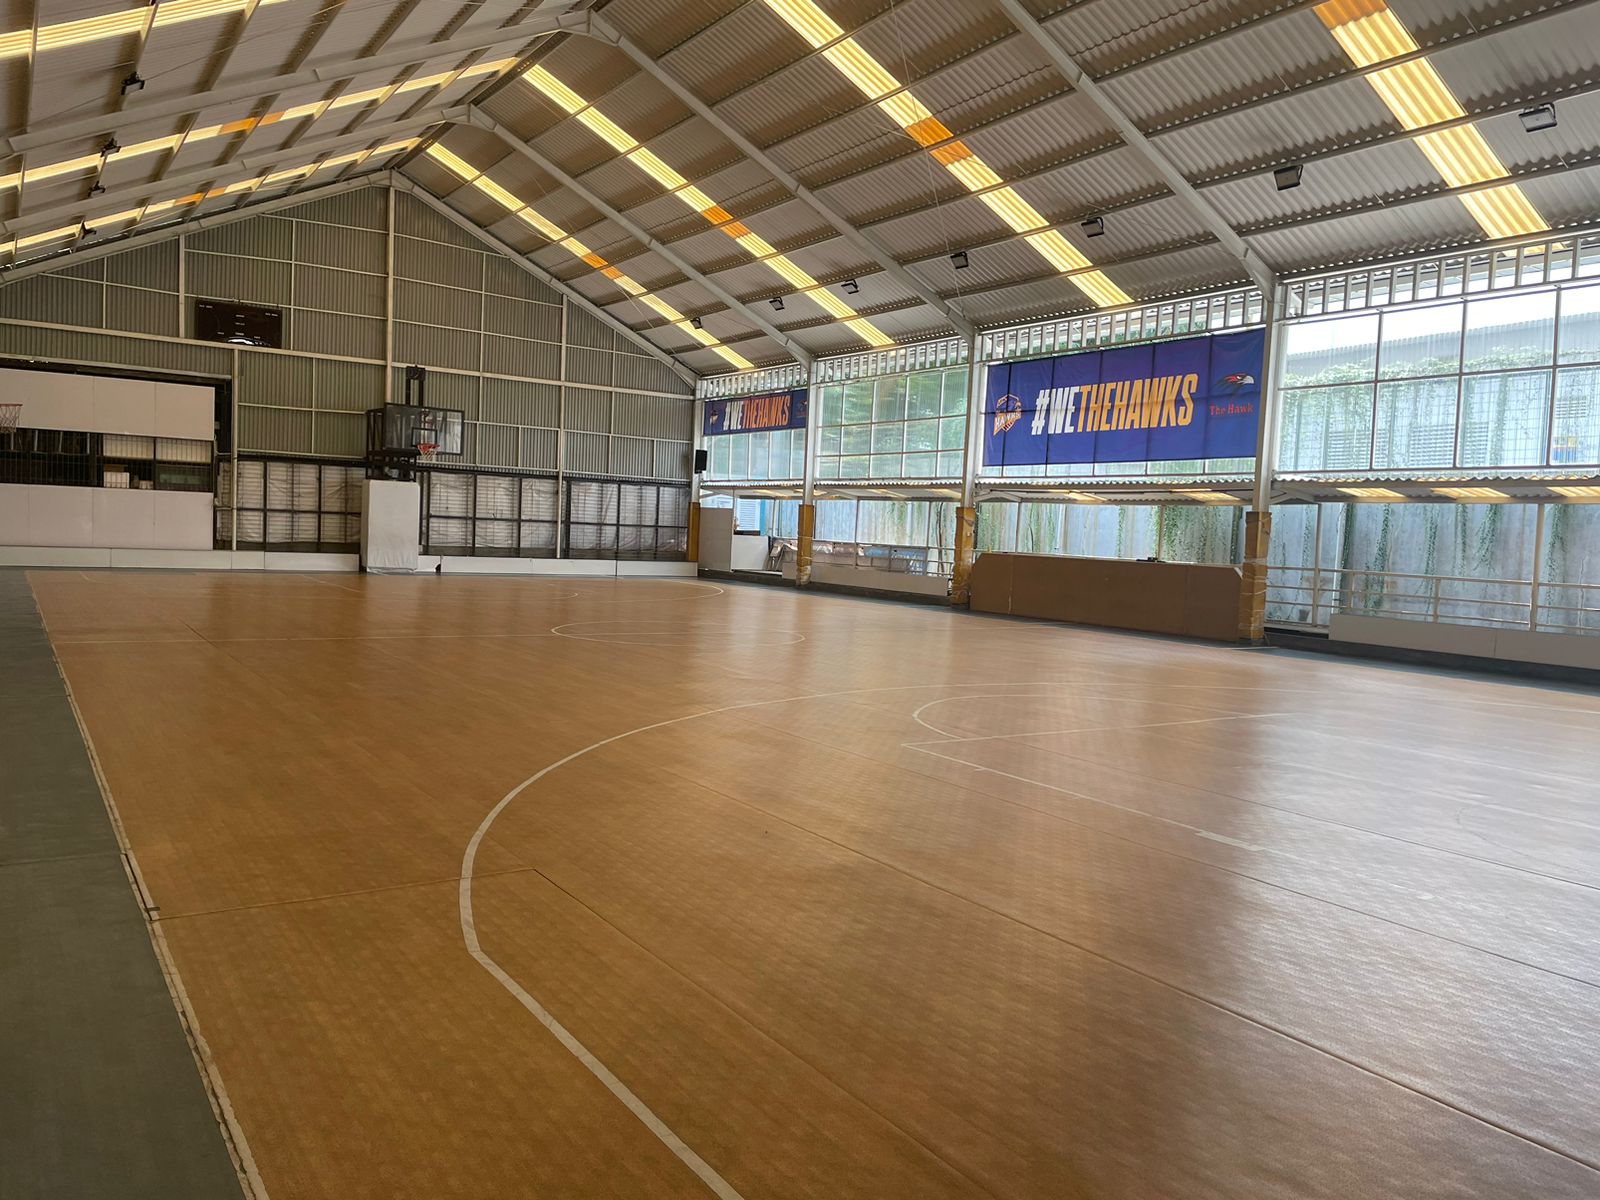 Lapangan The Hawk Basketball